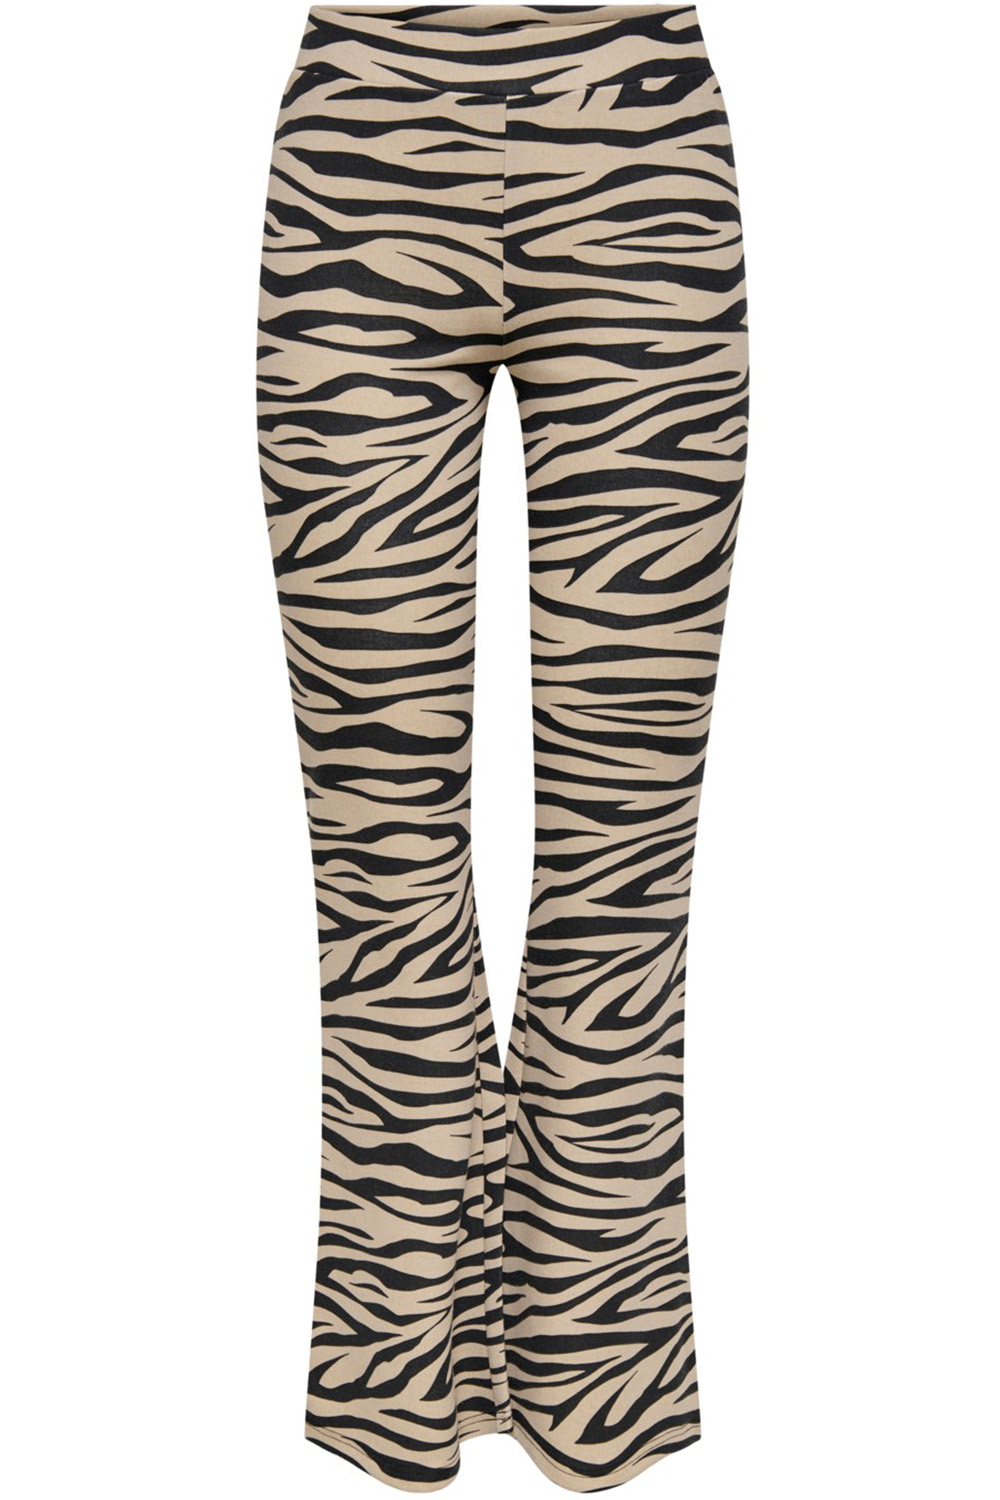 zebra flare pants